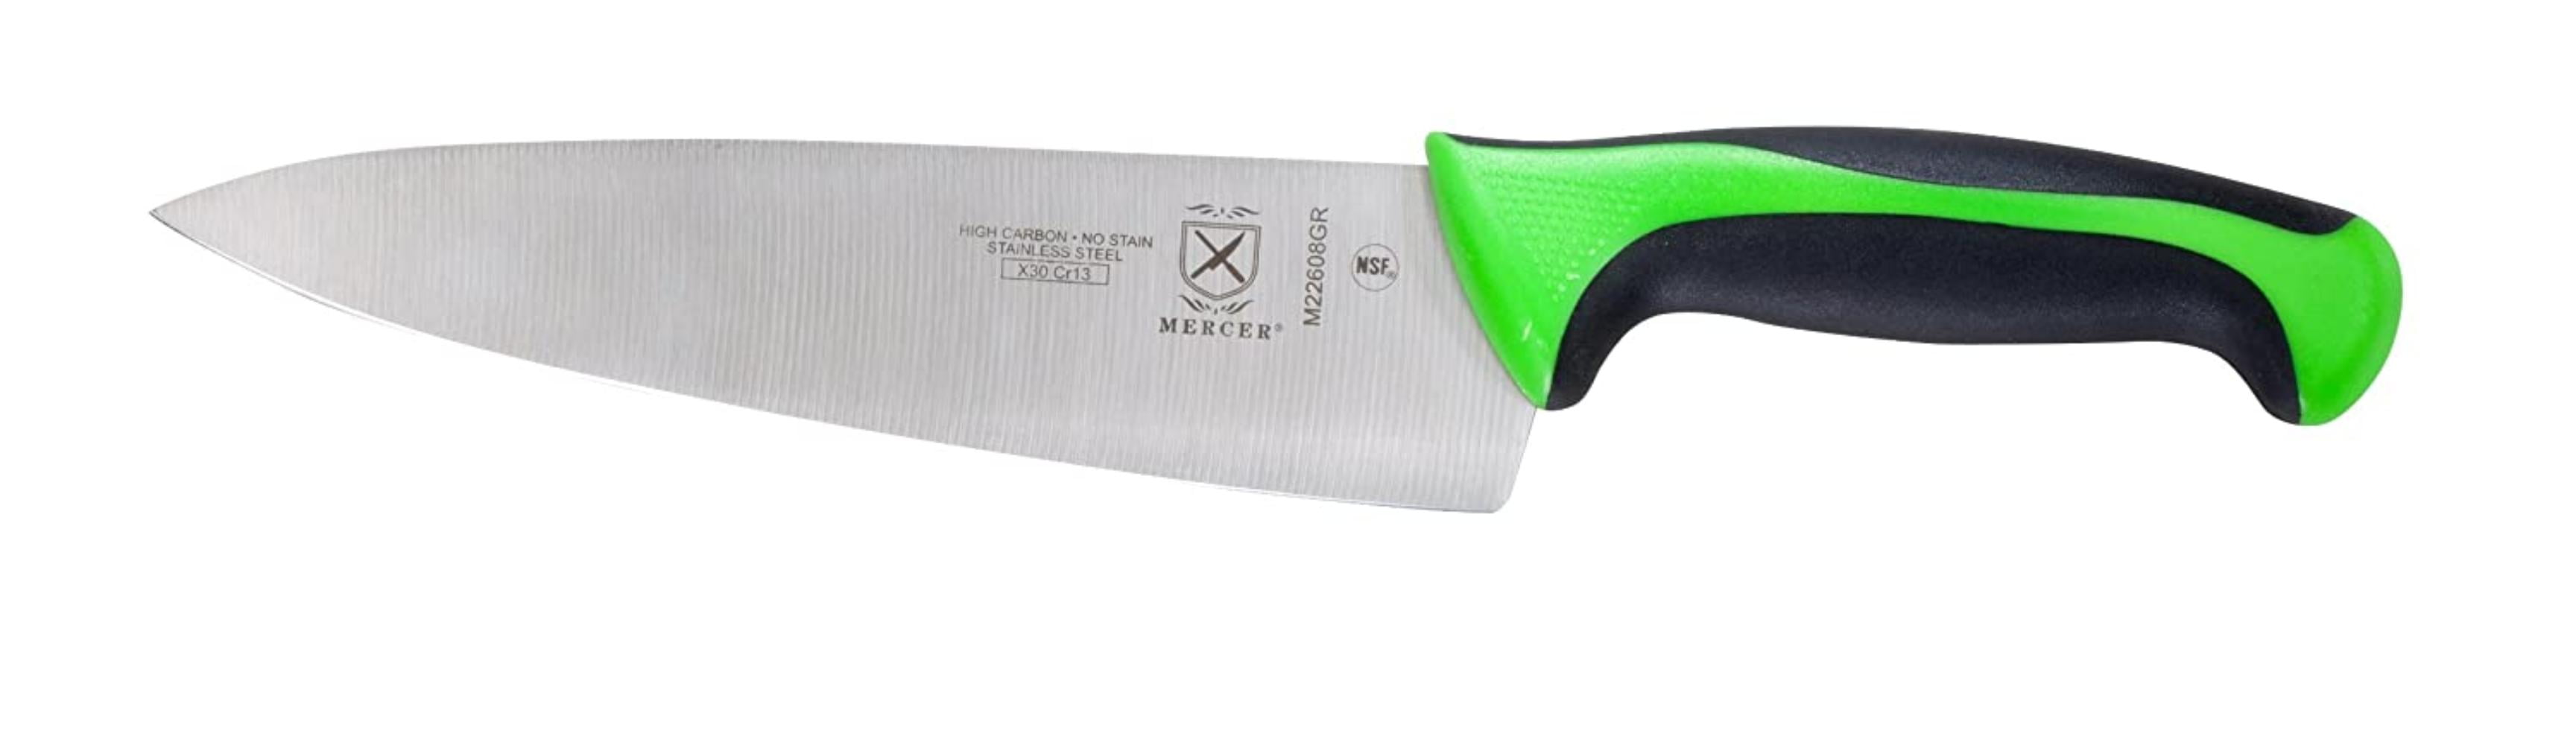 Mercer Culinary Millennia Chefs Knife, 8-Inch, Green - Walmart.com 